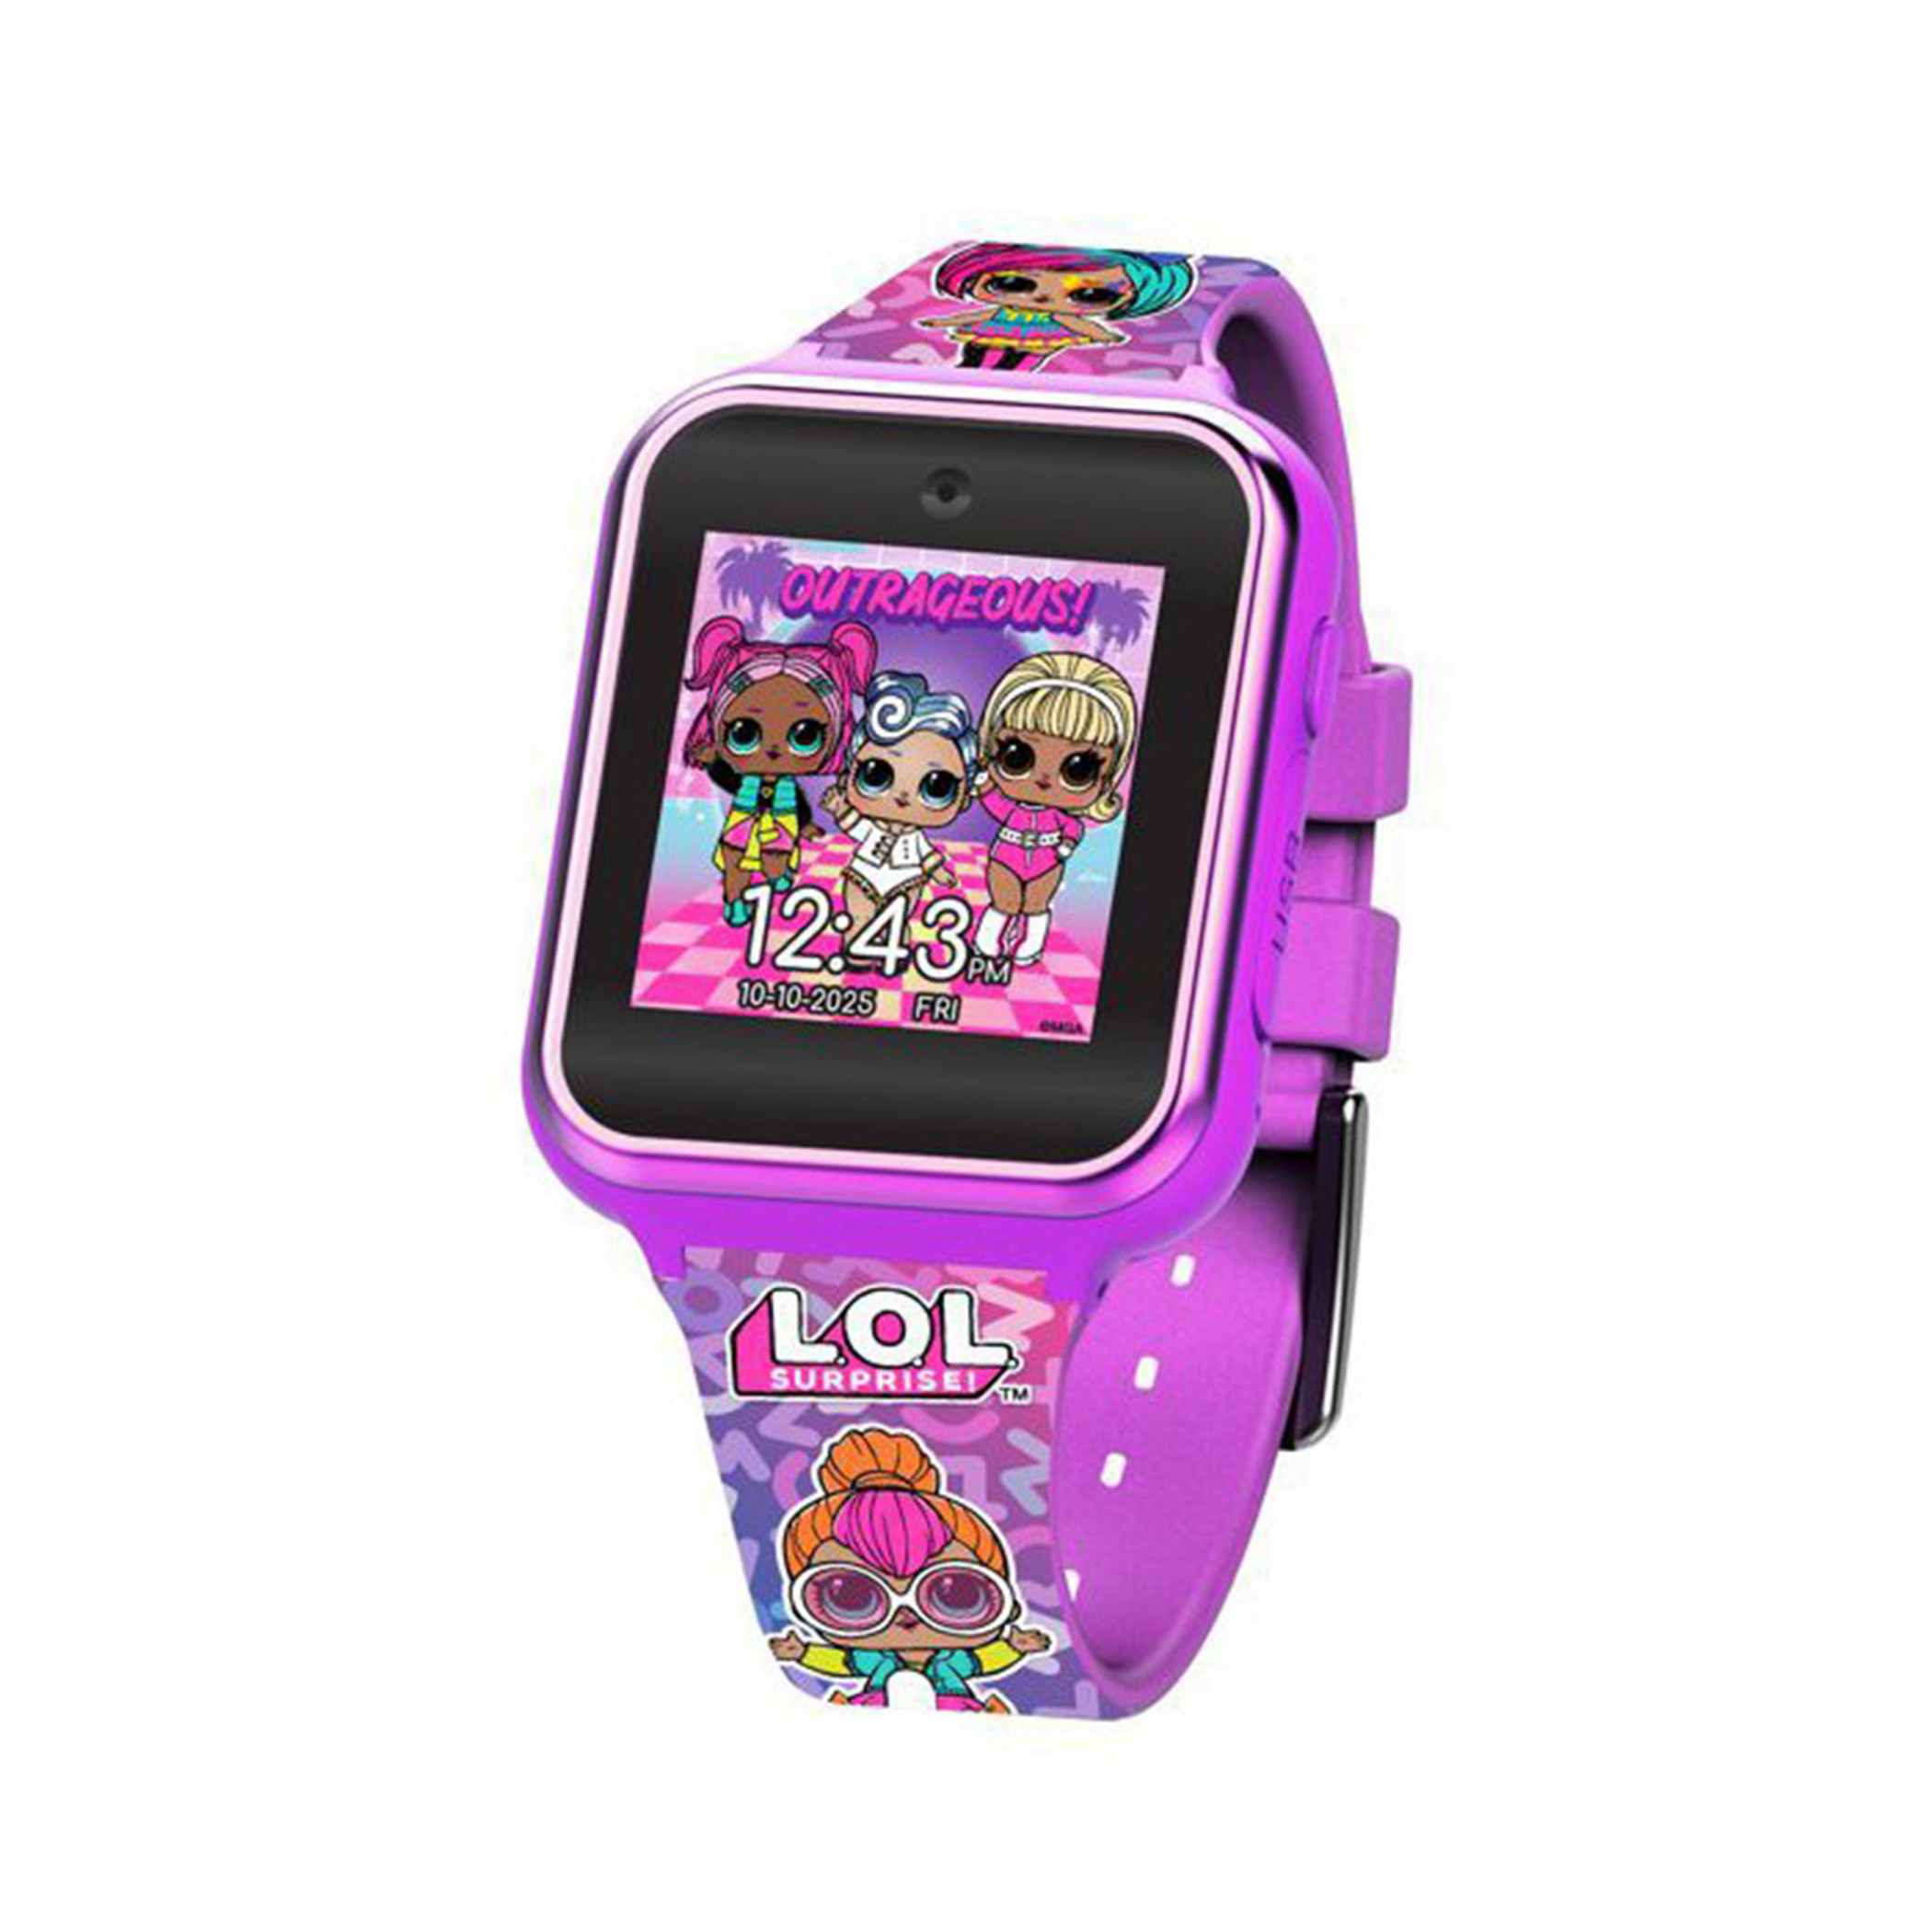 LOL Surprise Flashing LCD Watch - Pink Sports Band | Free Shipping